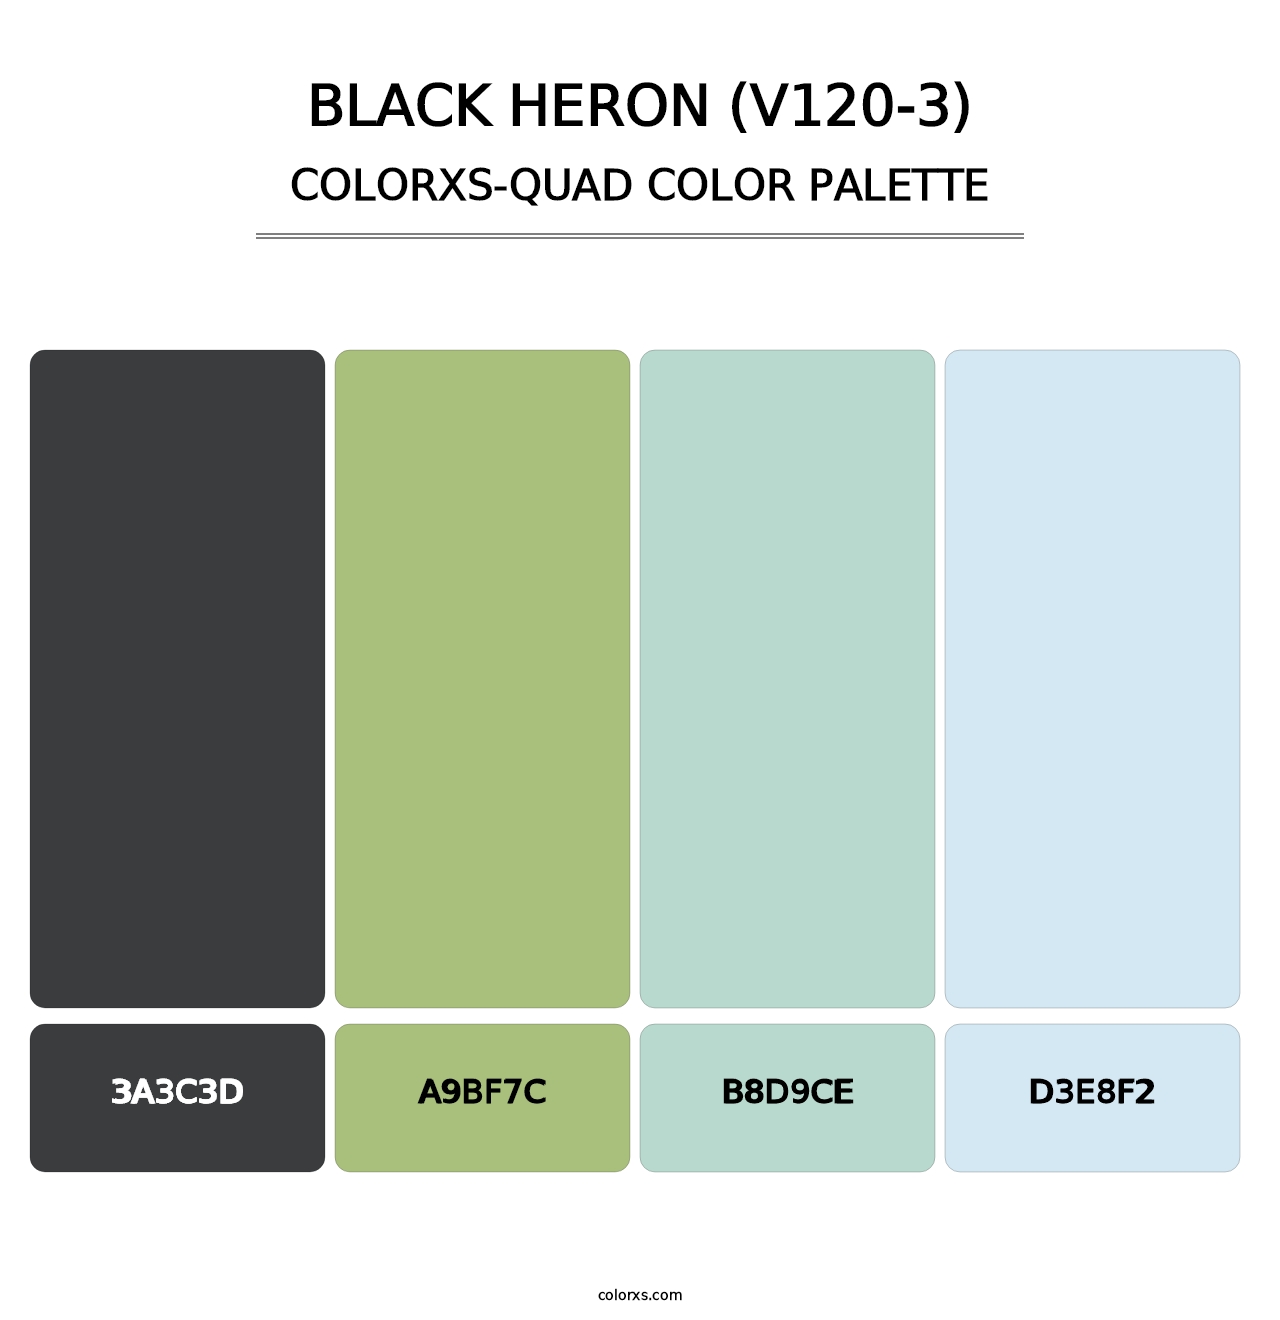 Black Heron (V120-3) - Colorxs Quad Palette